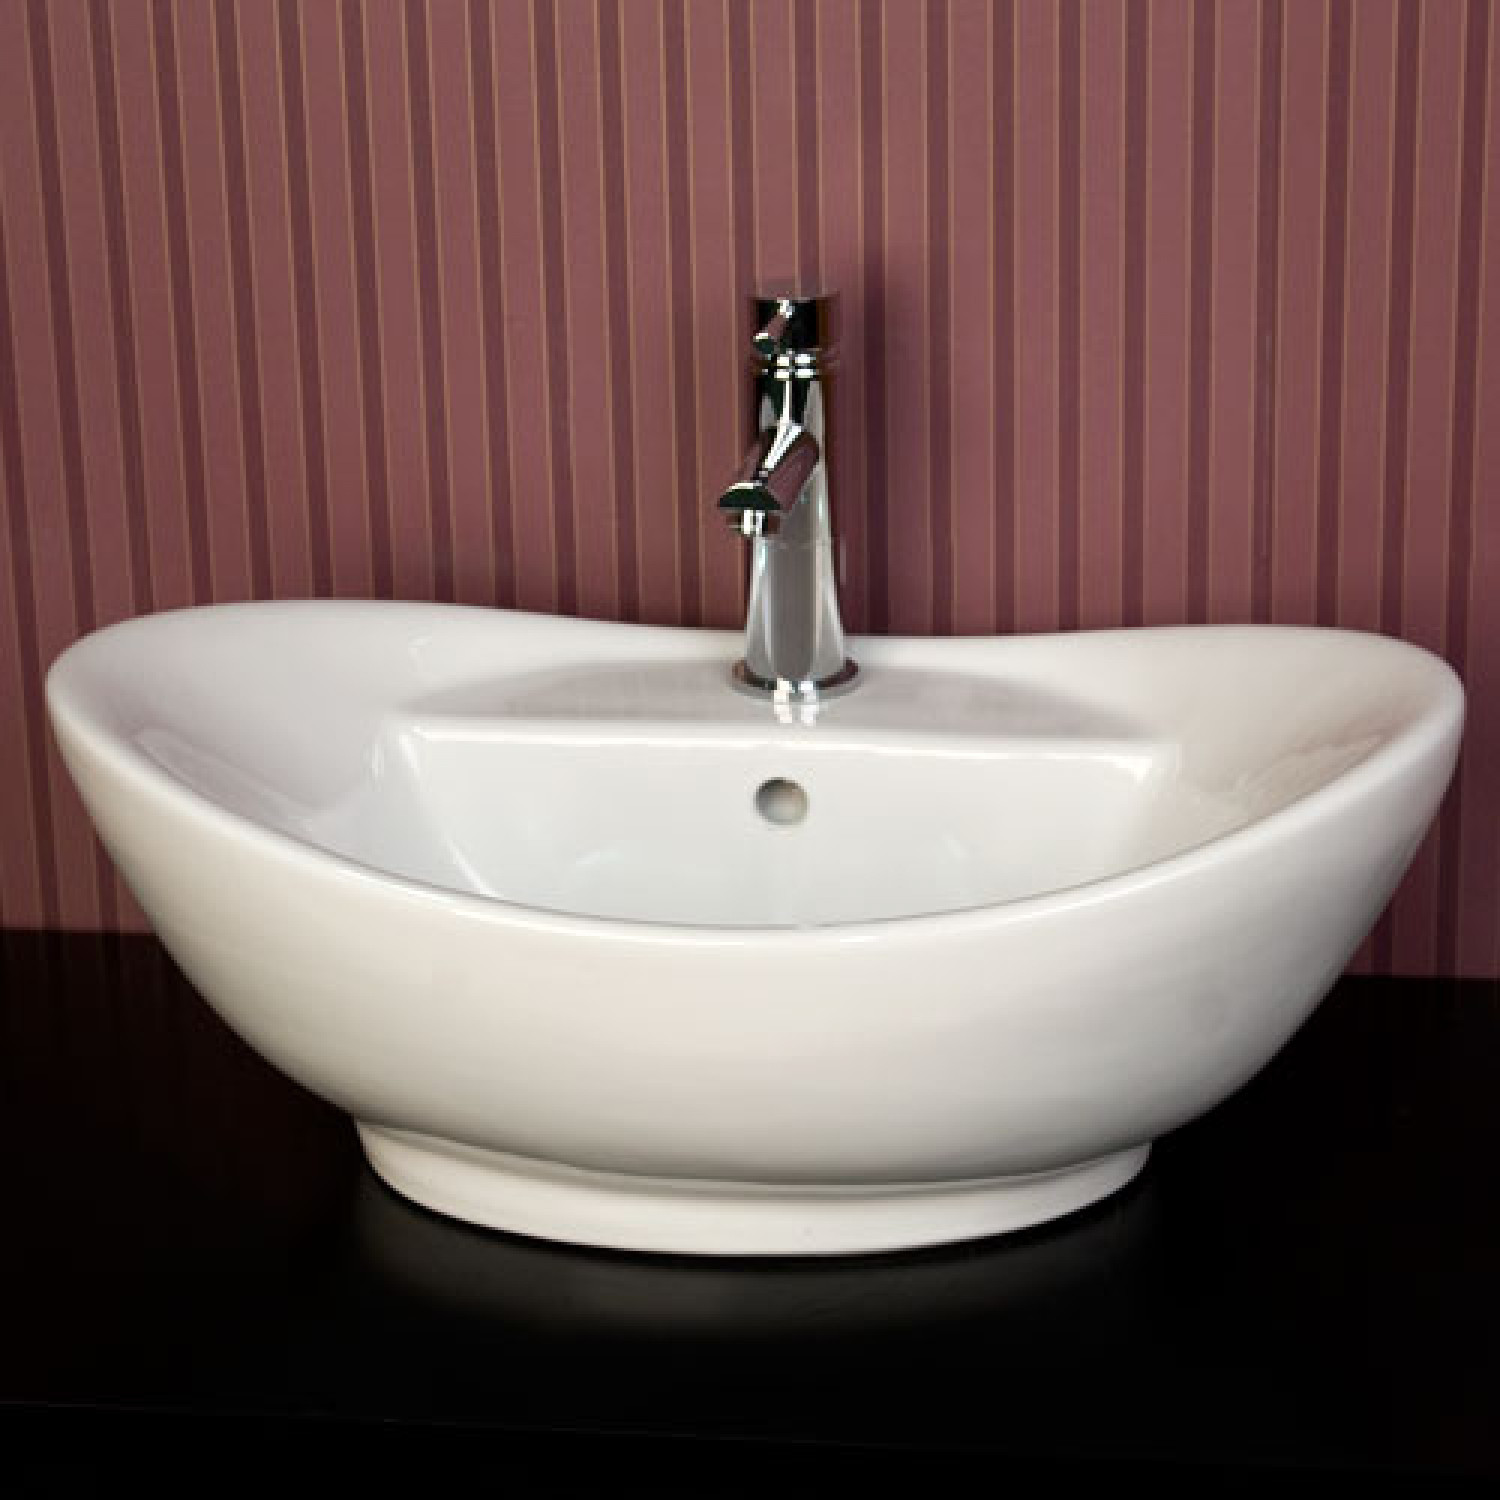 Best ideas about Vessel Bathroom Sinks
. Save or Pin Kendrick Porcelain Vessel Sink Bathroom Now.